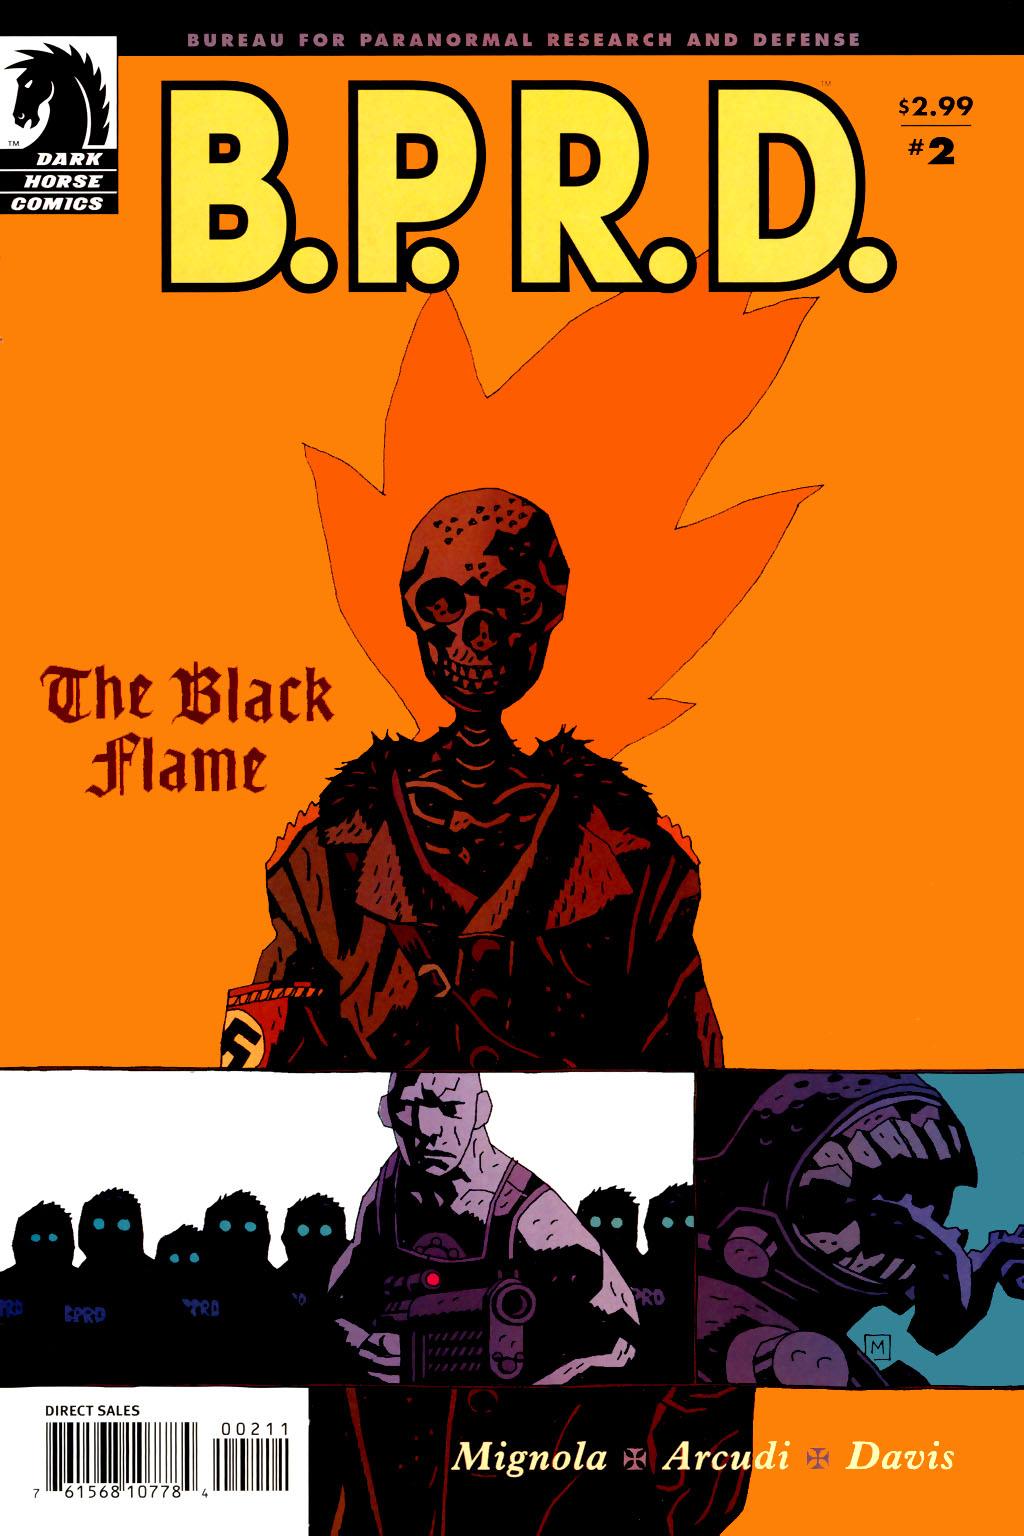 B.P.R.D.: The Black Flame Vol. 1 #2